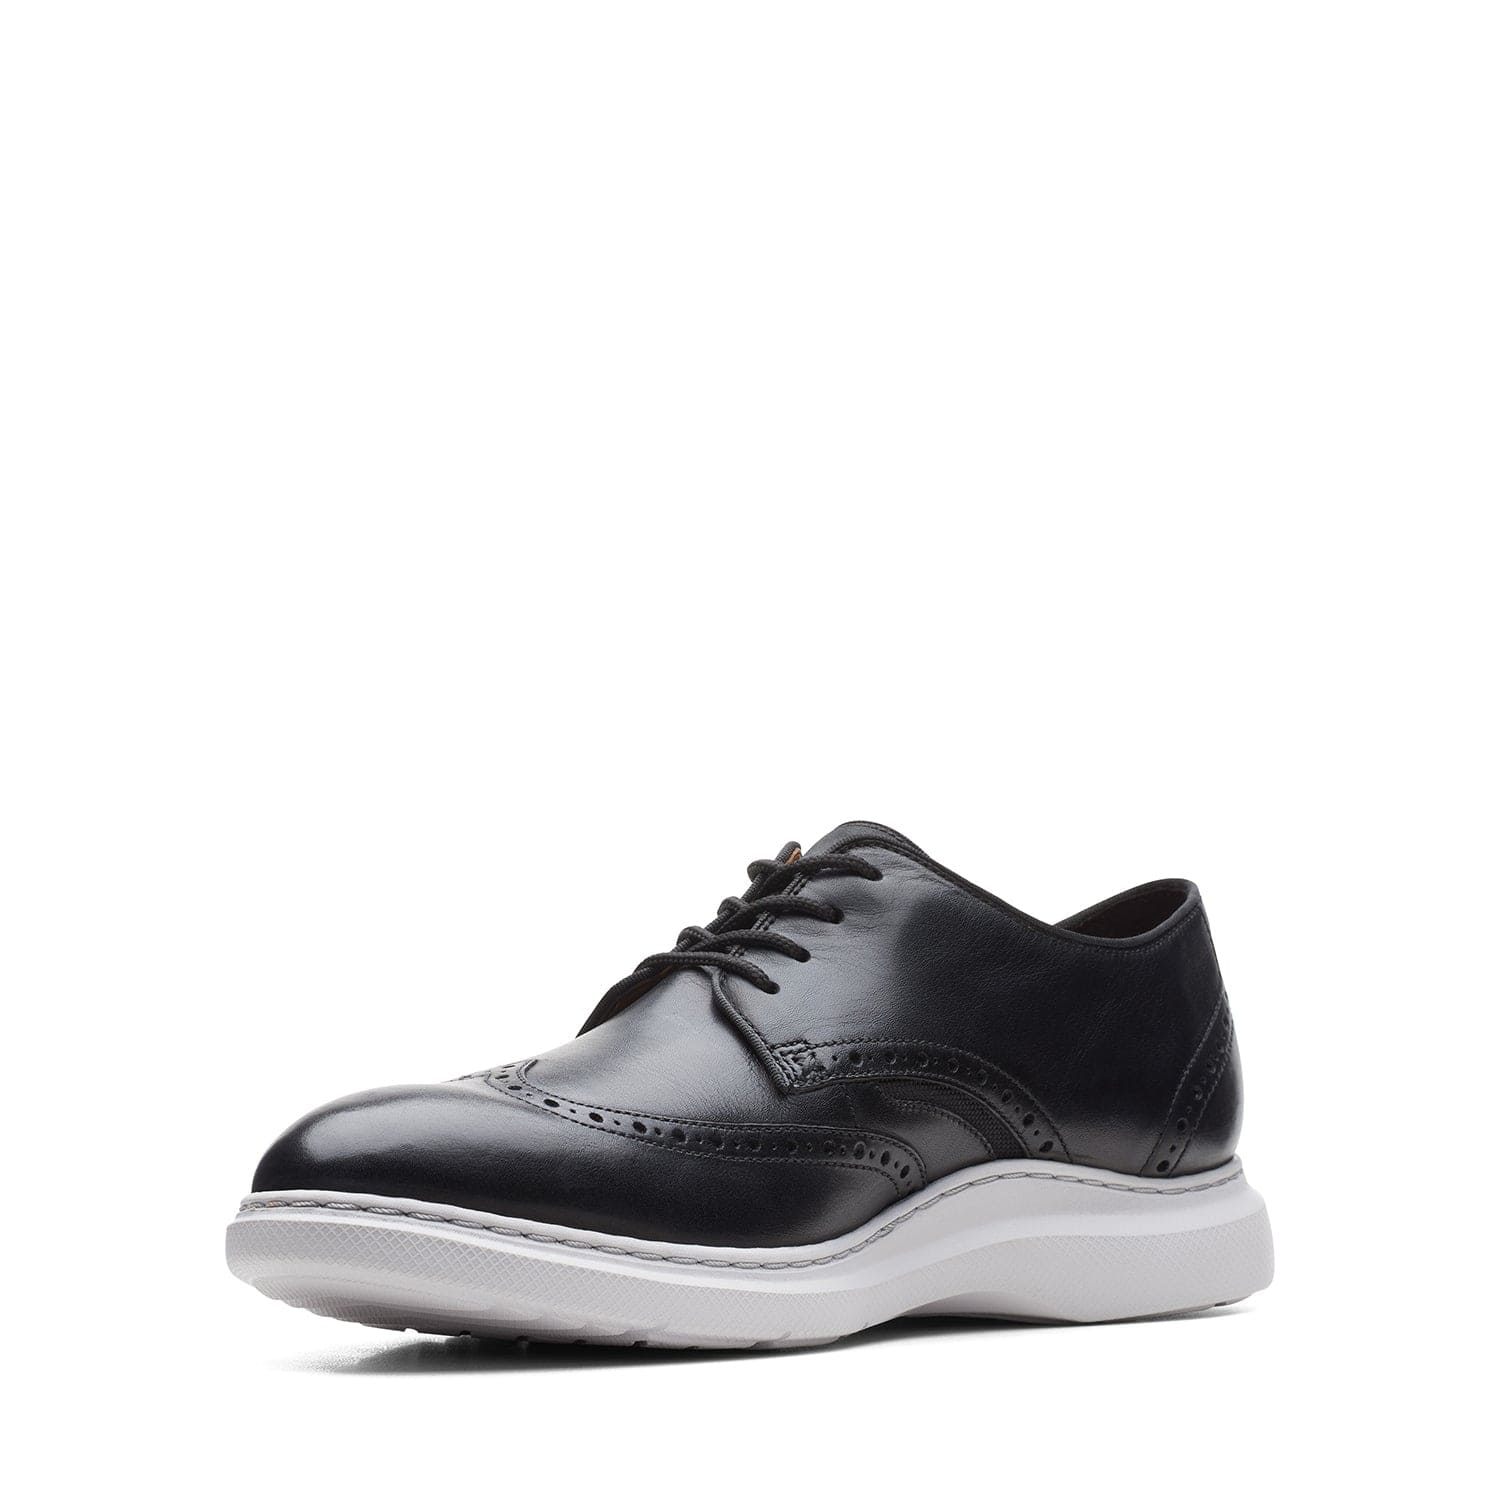 Clarks Dennet Wing Shoes - Black Leather - 261629107 - G Width (Standard Fit)